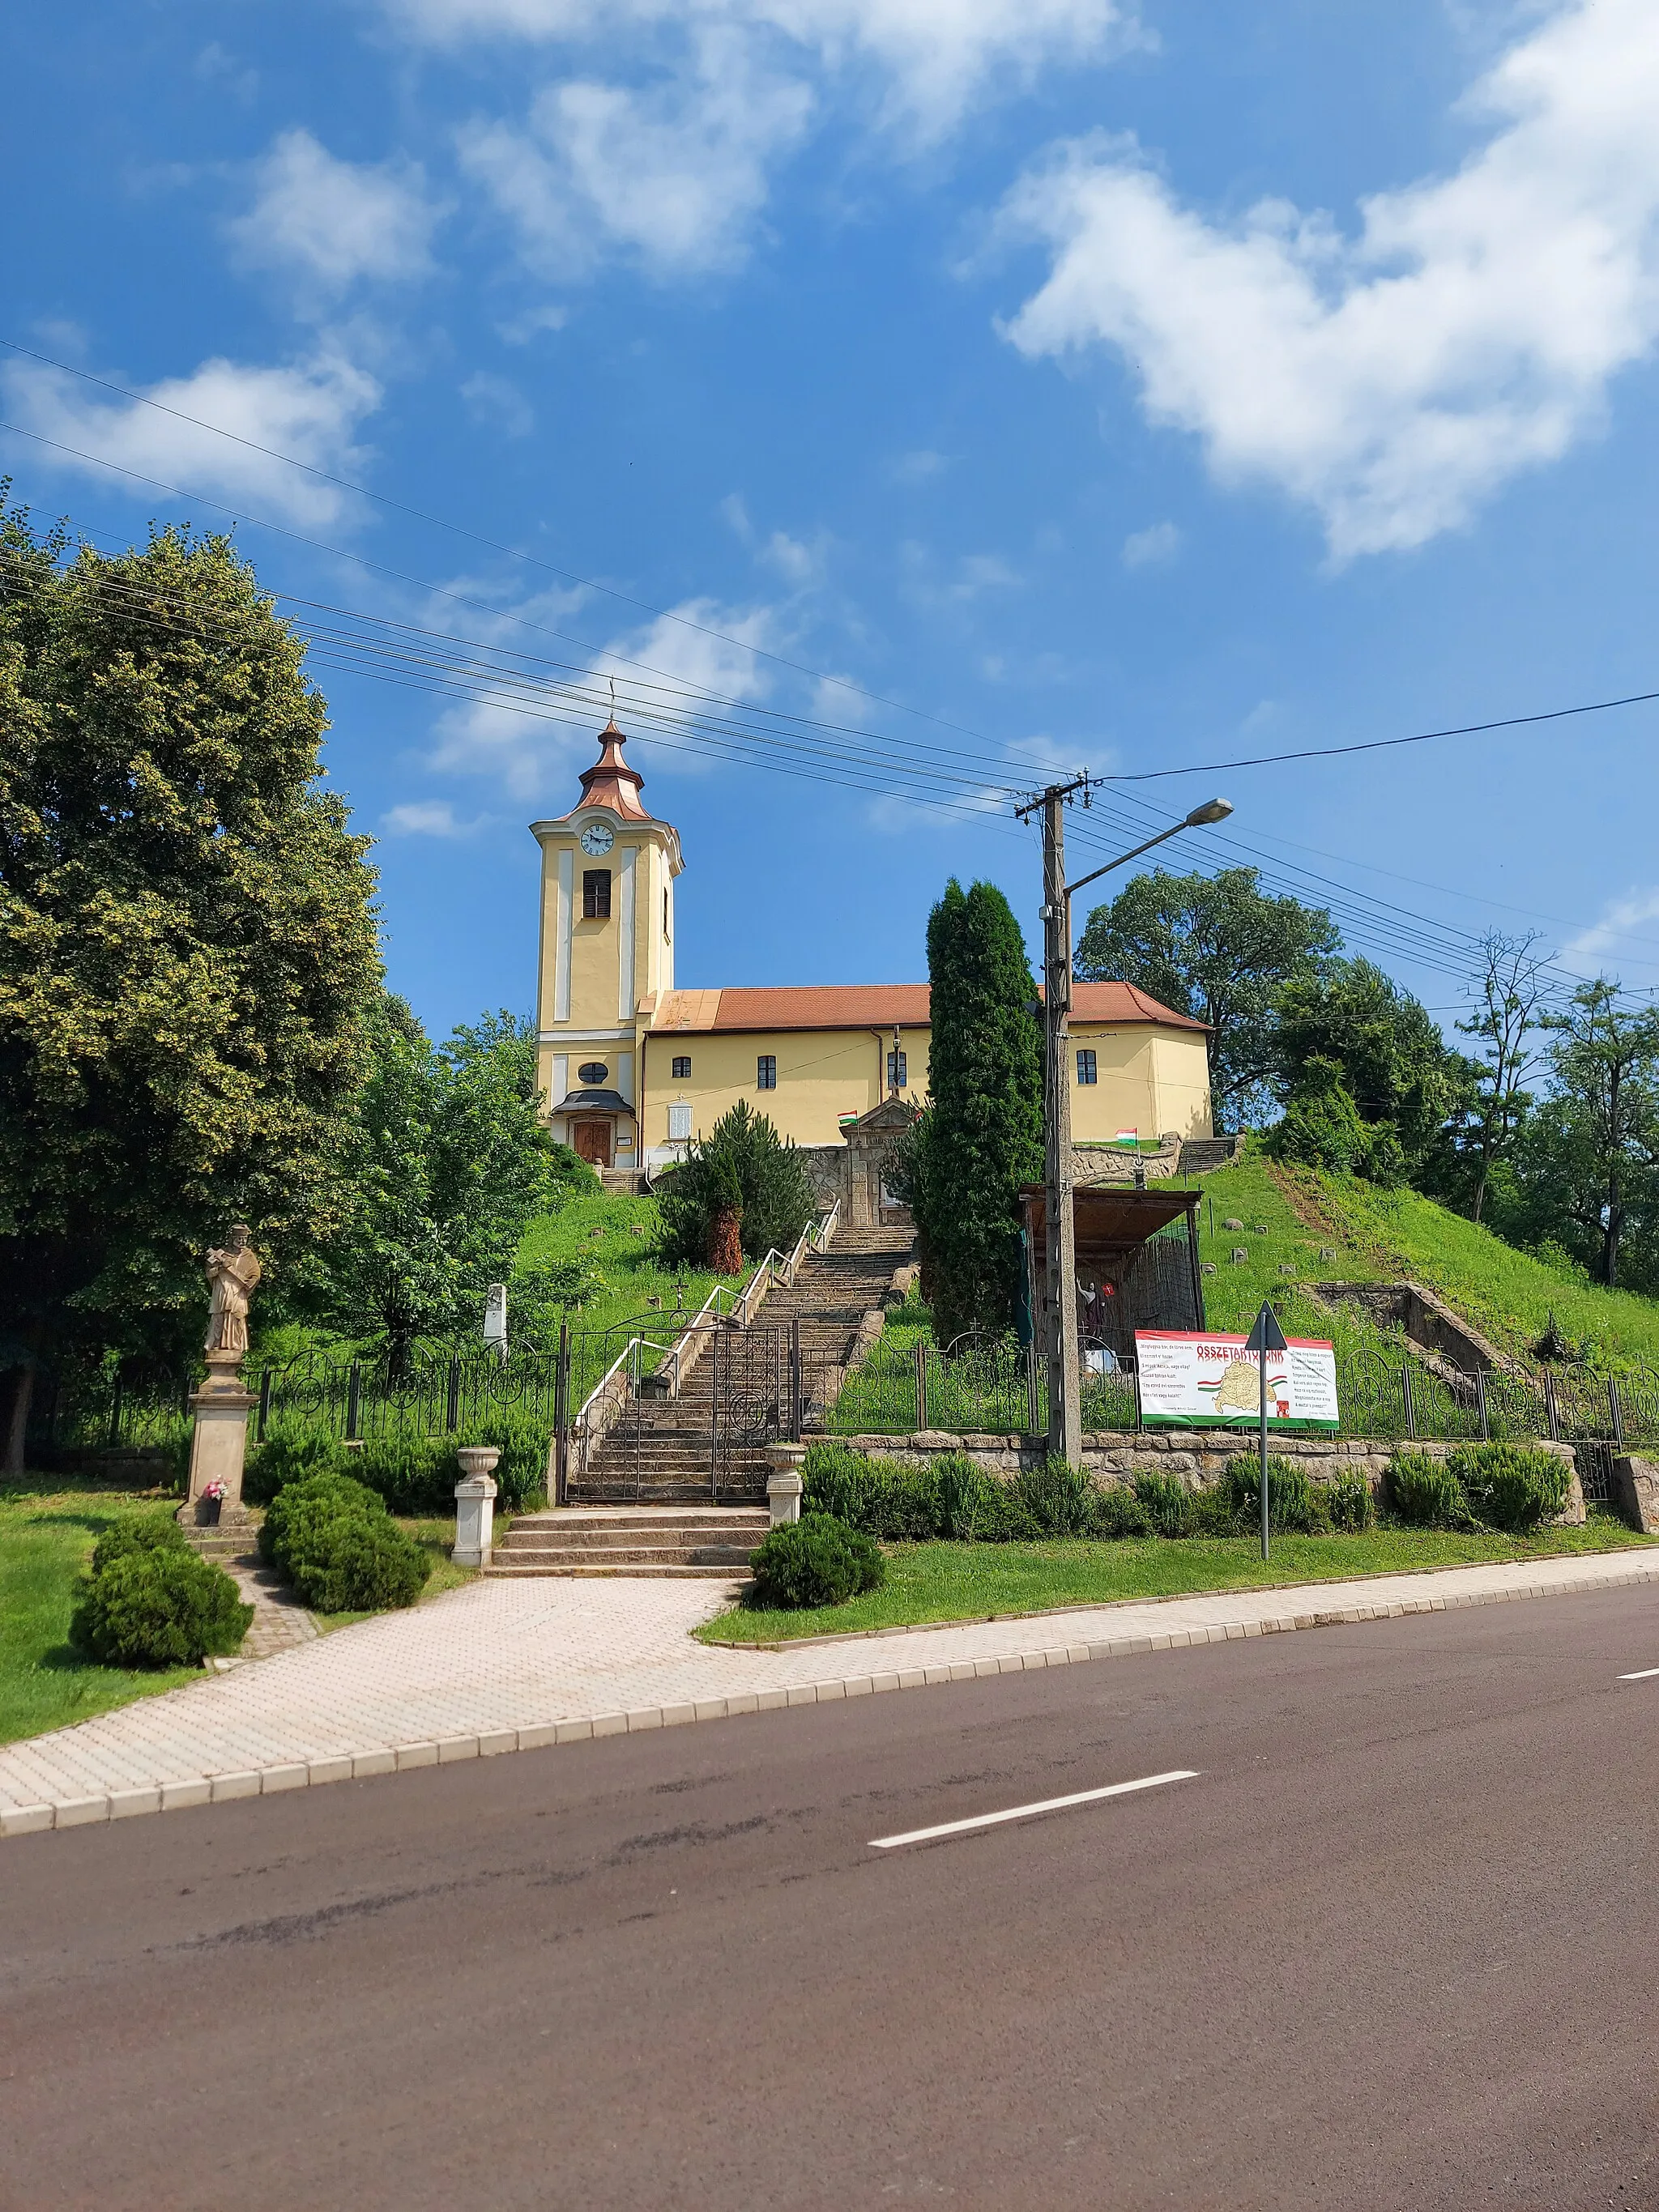 Photo showing: A siroki katolikus templom